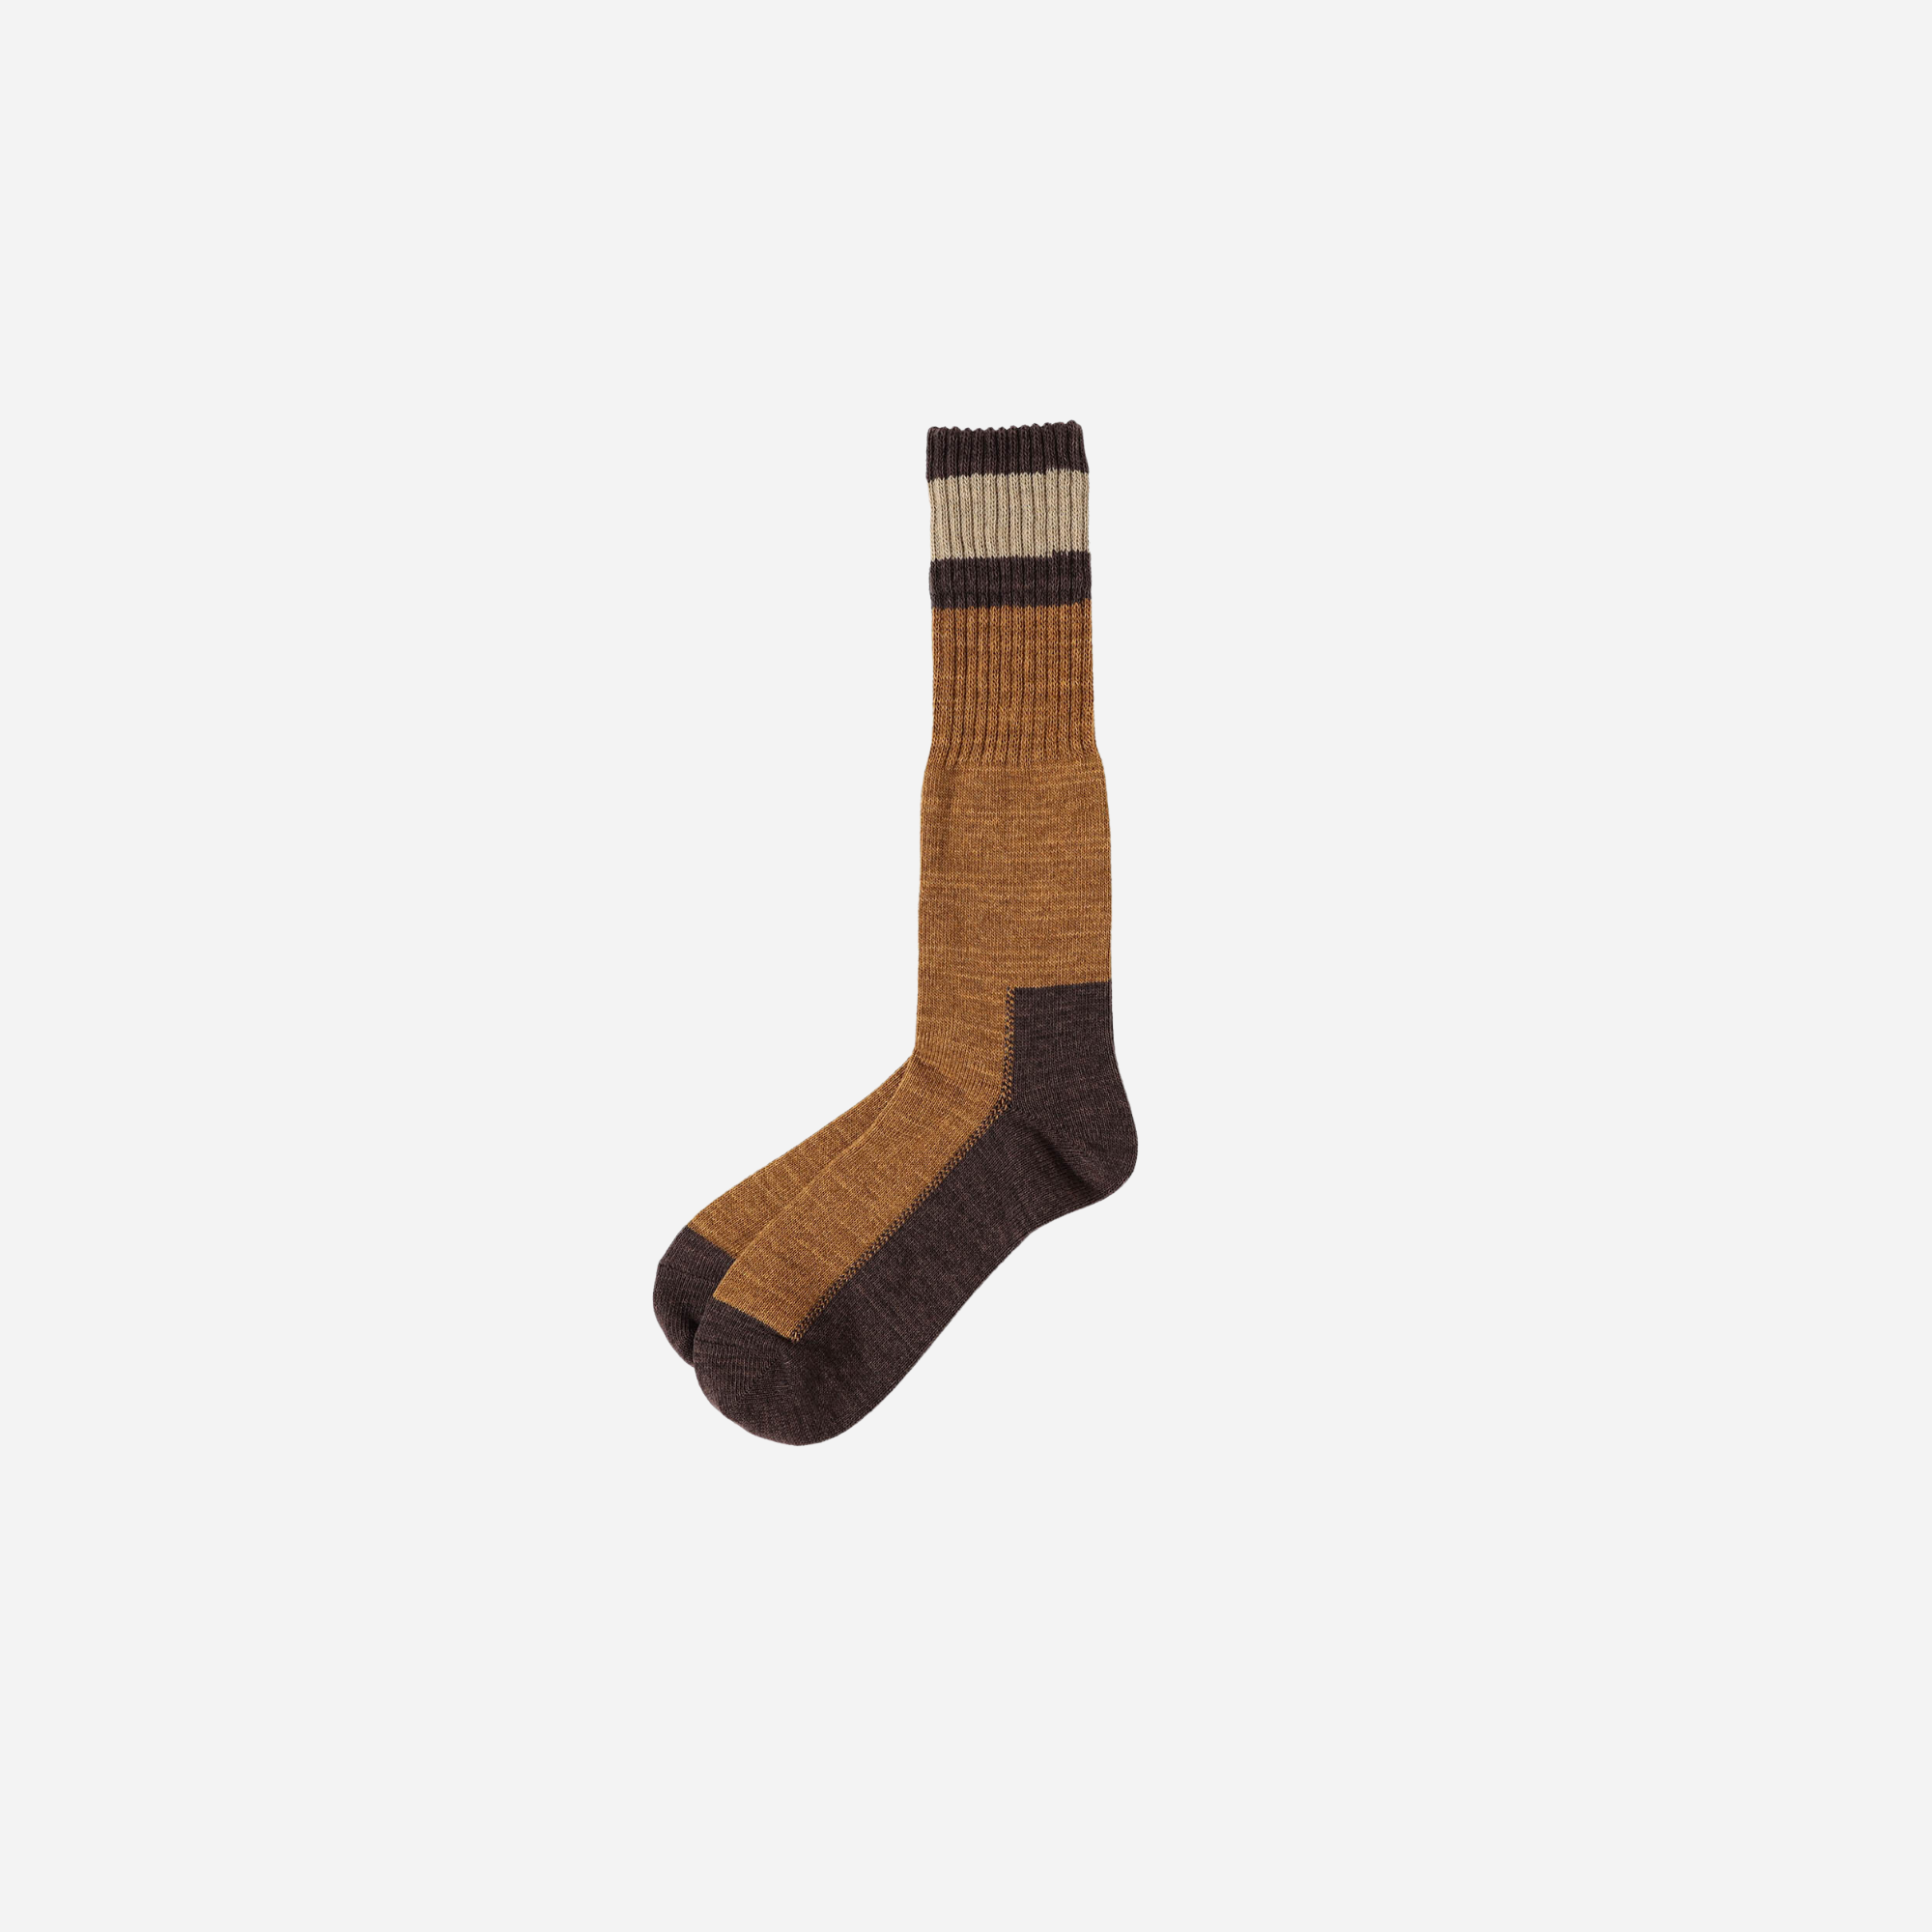 B+Boots Socks